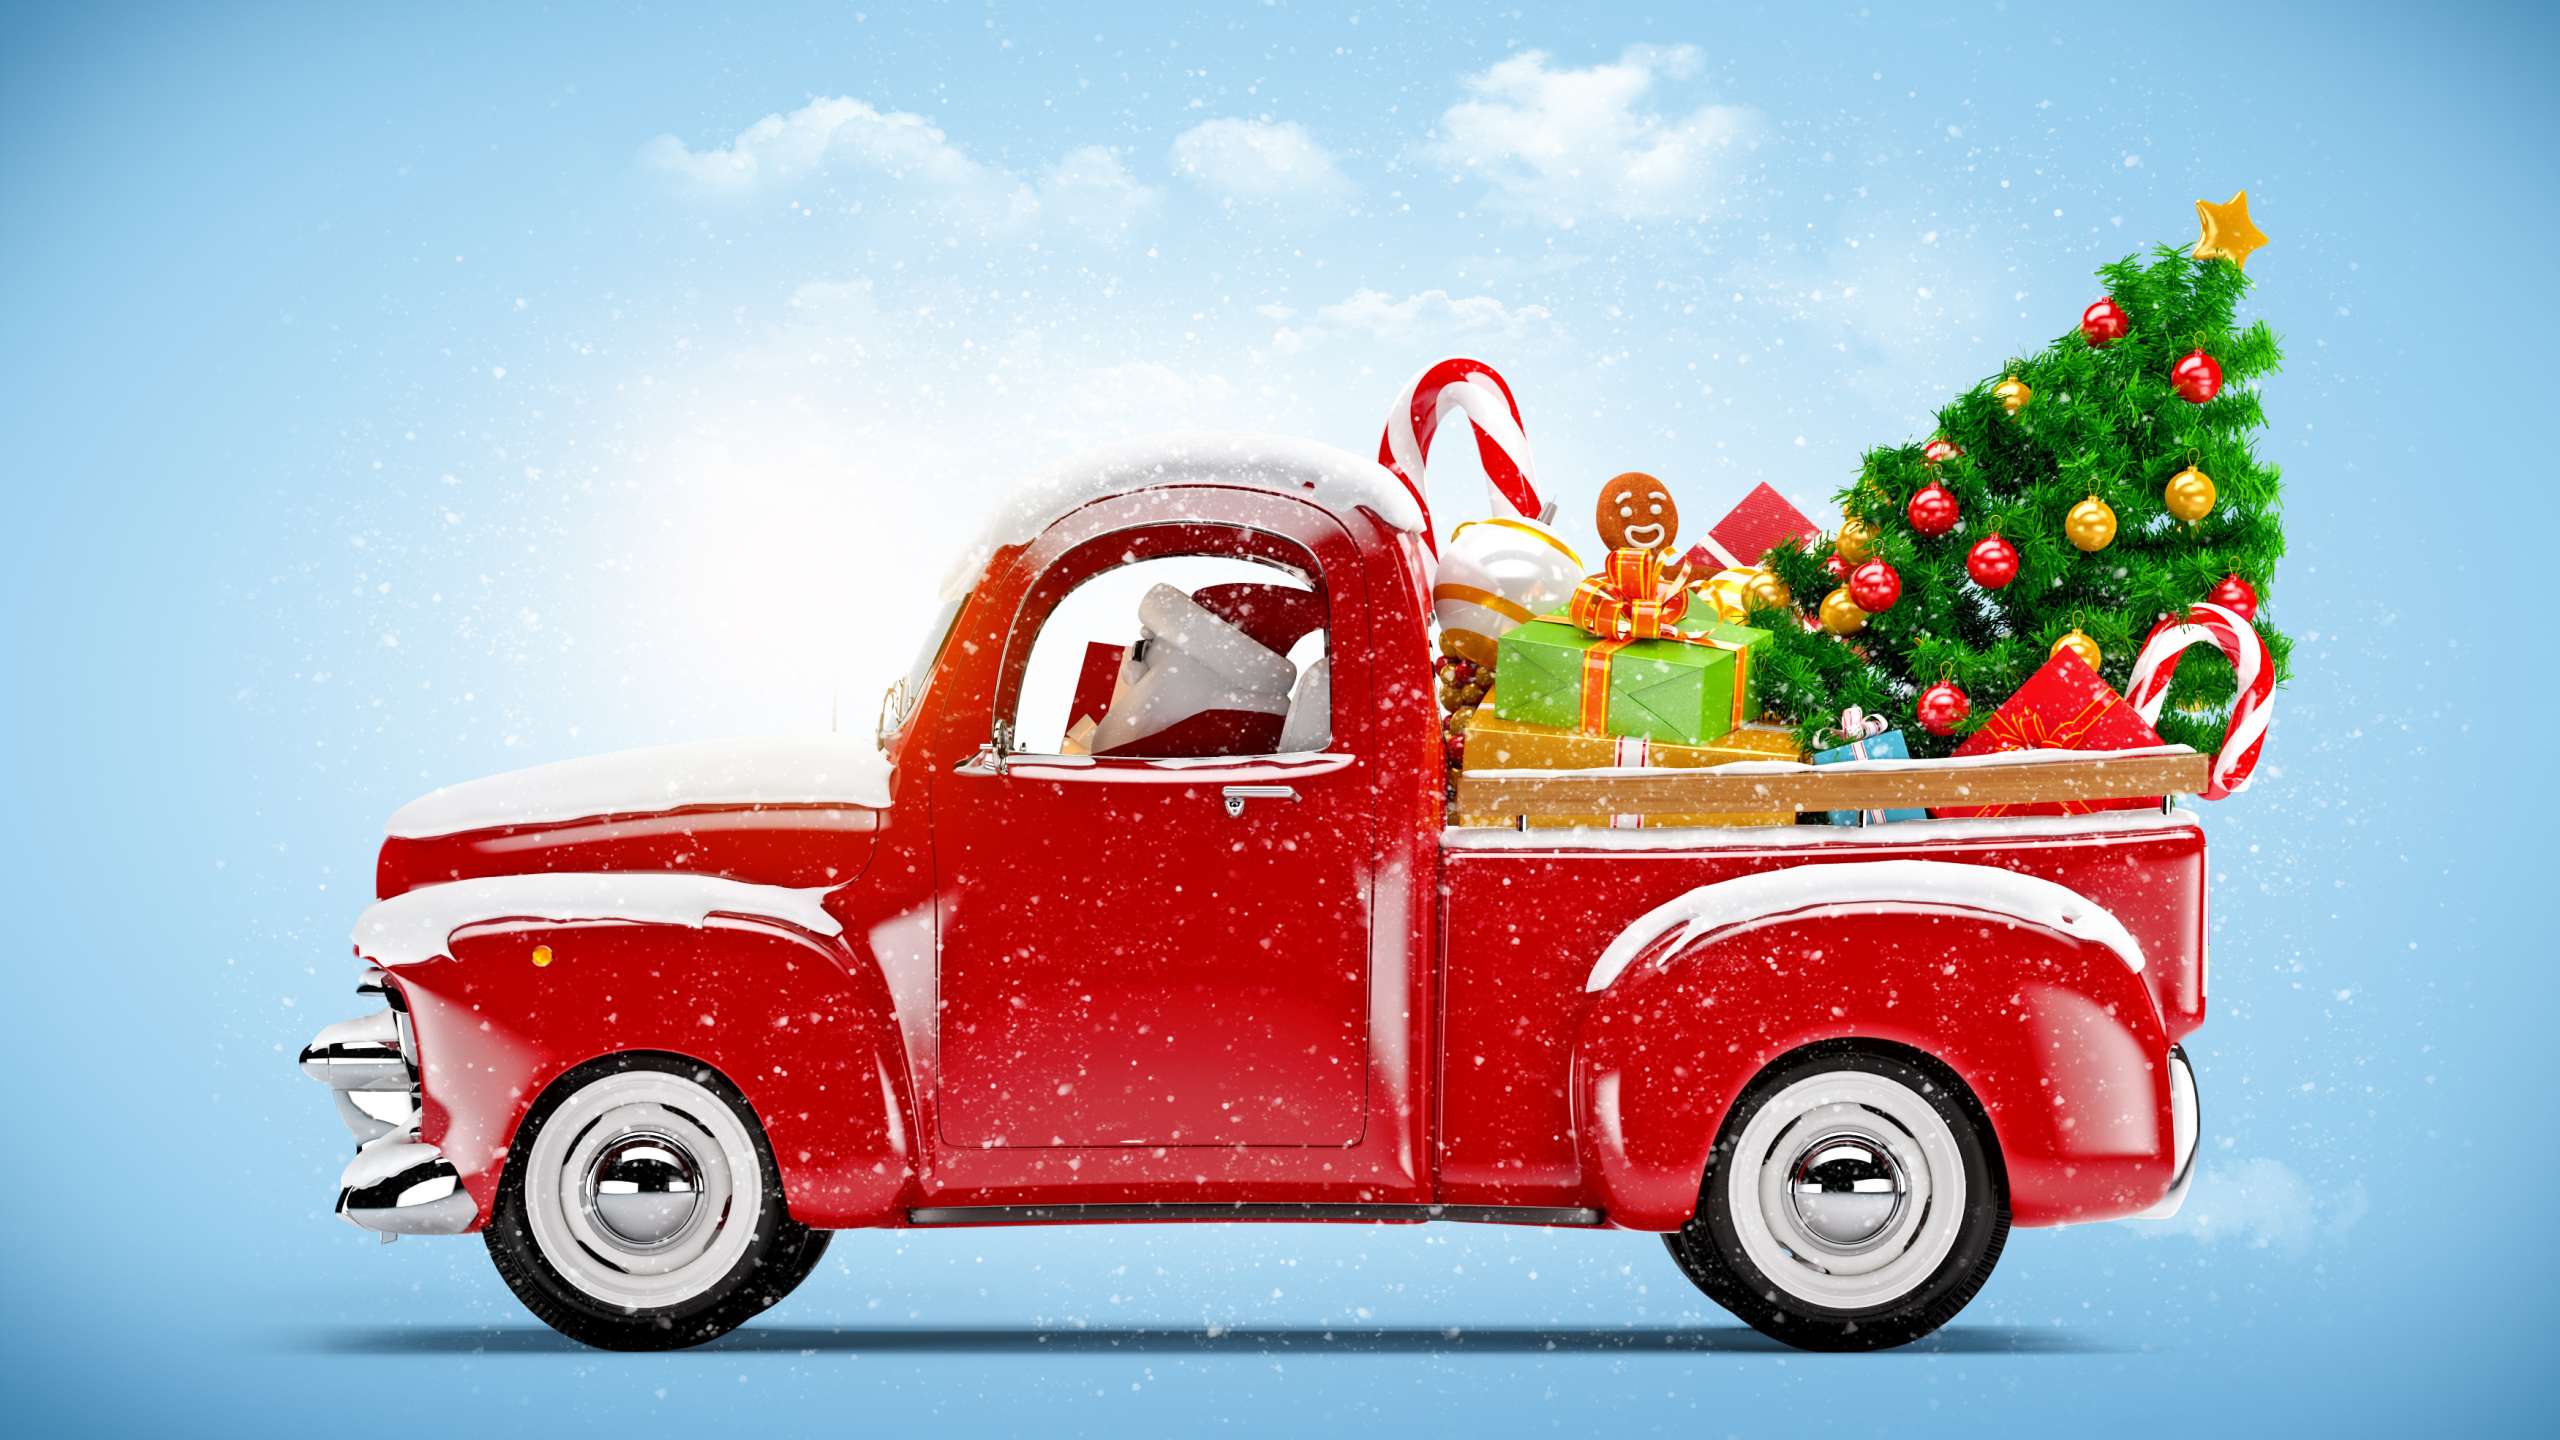 дед мороз, дед, мороз, подарки, автомобиль, новый год, рождество, car, grandfather frost, grandfather, frost, happy, holidays, xmas, christmas, gifts, drive, tree, spruce, see, toys, sun, winter, wide